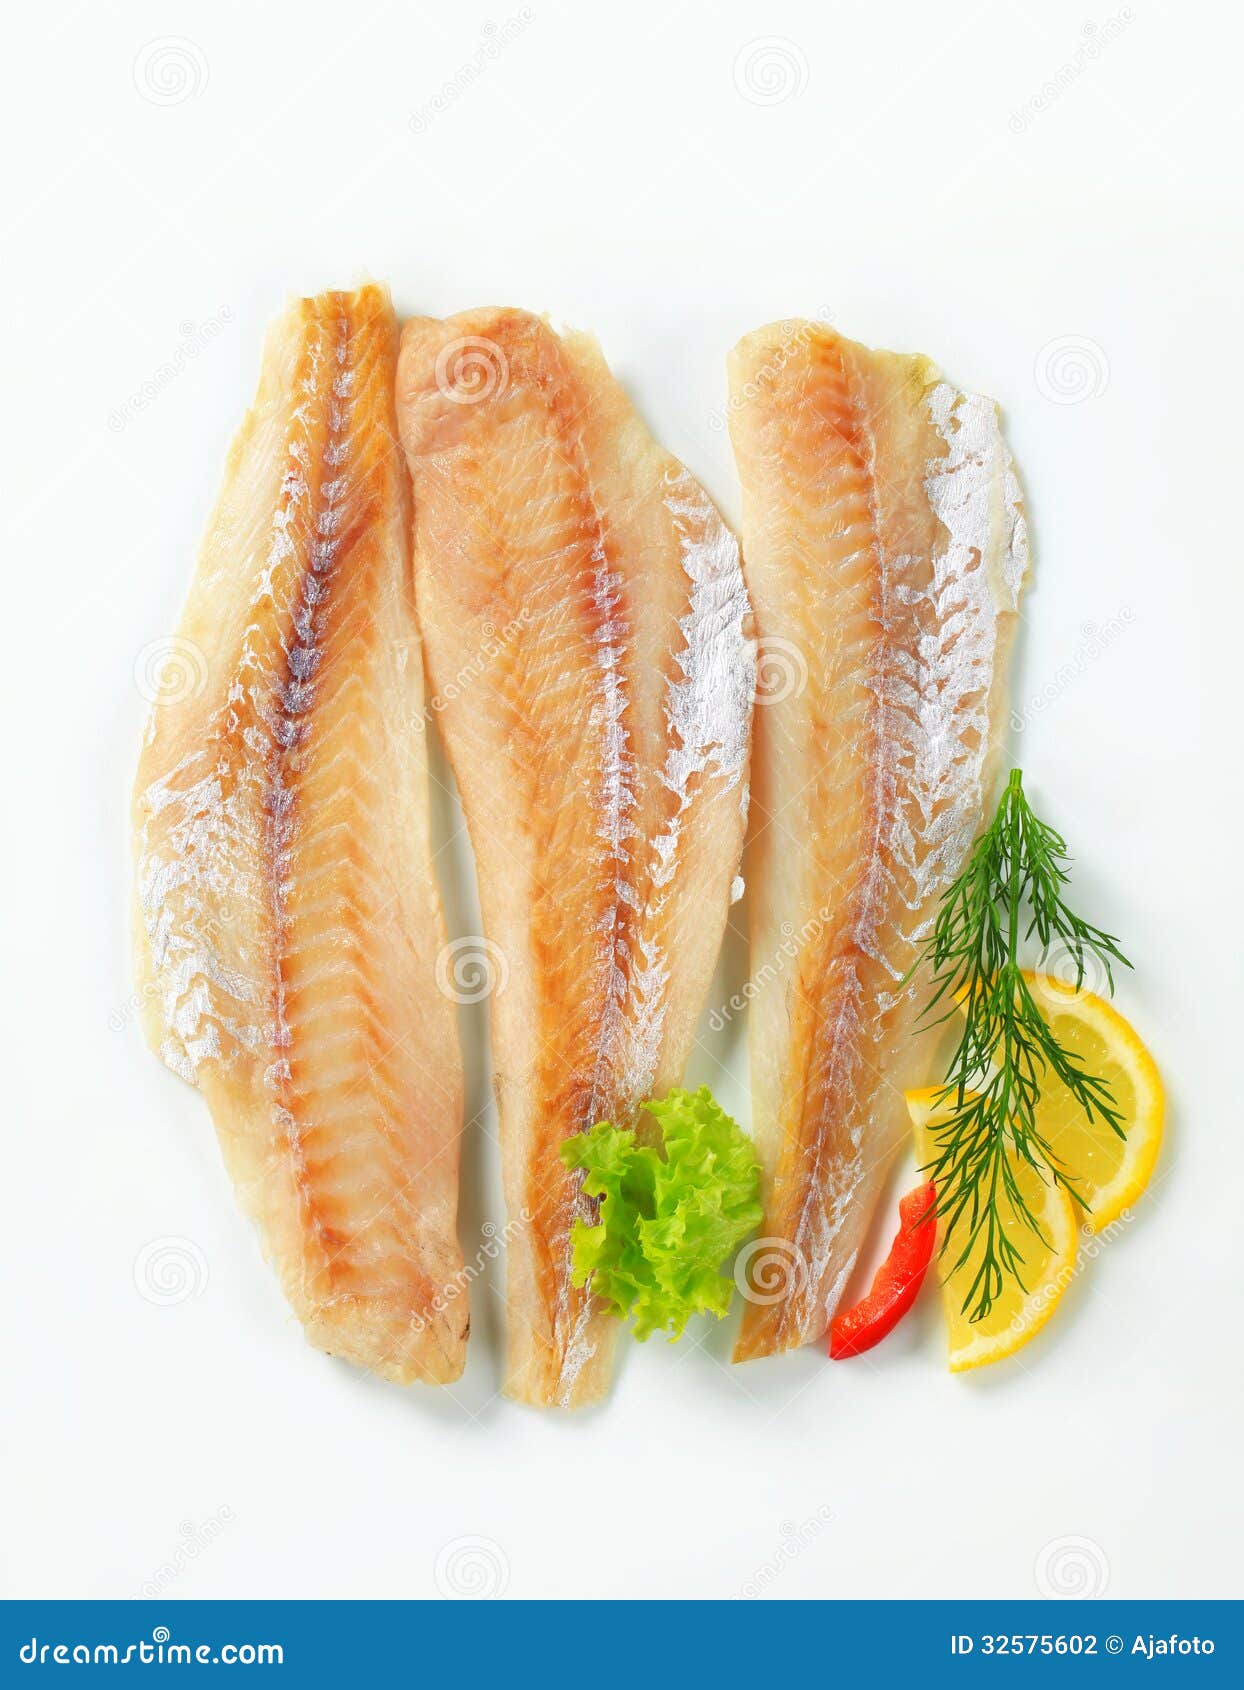 whitefish fillets